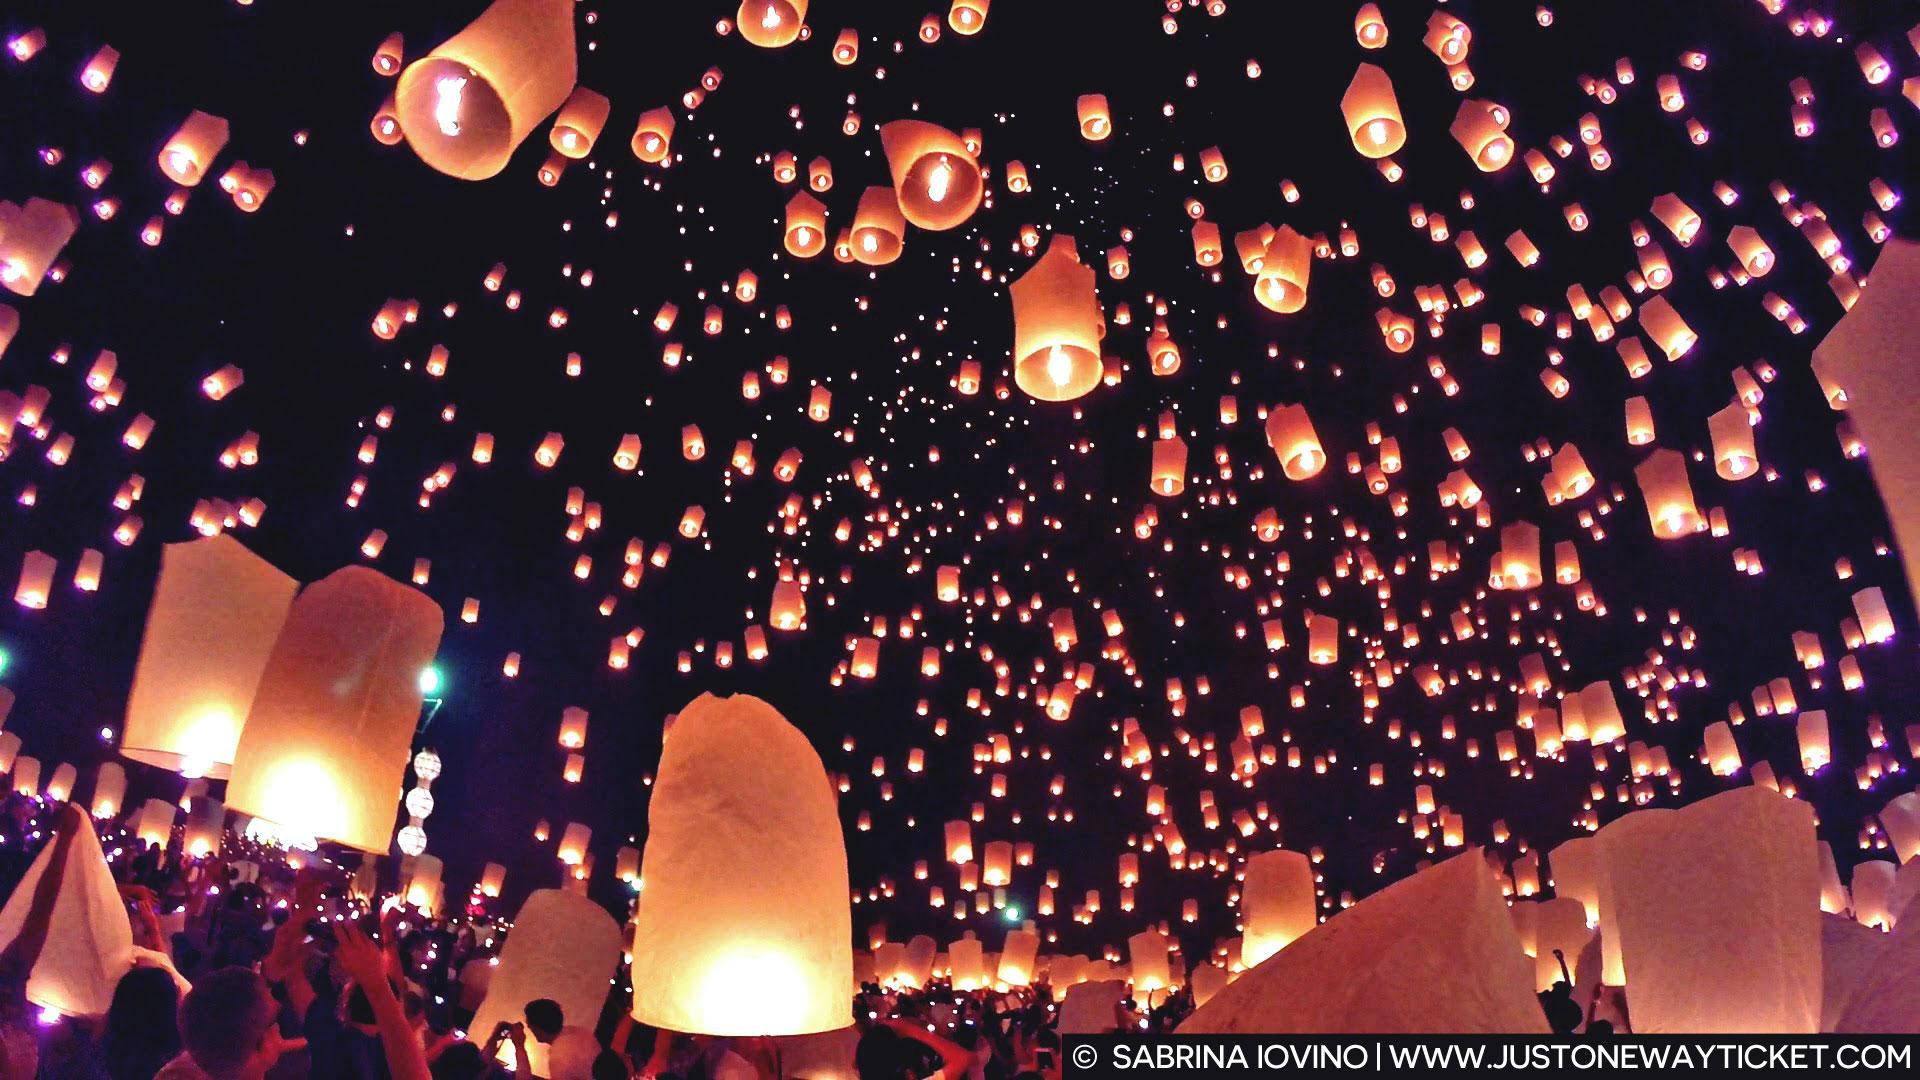 Enchanting scenes from Loy Krathong, magical lantern festival